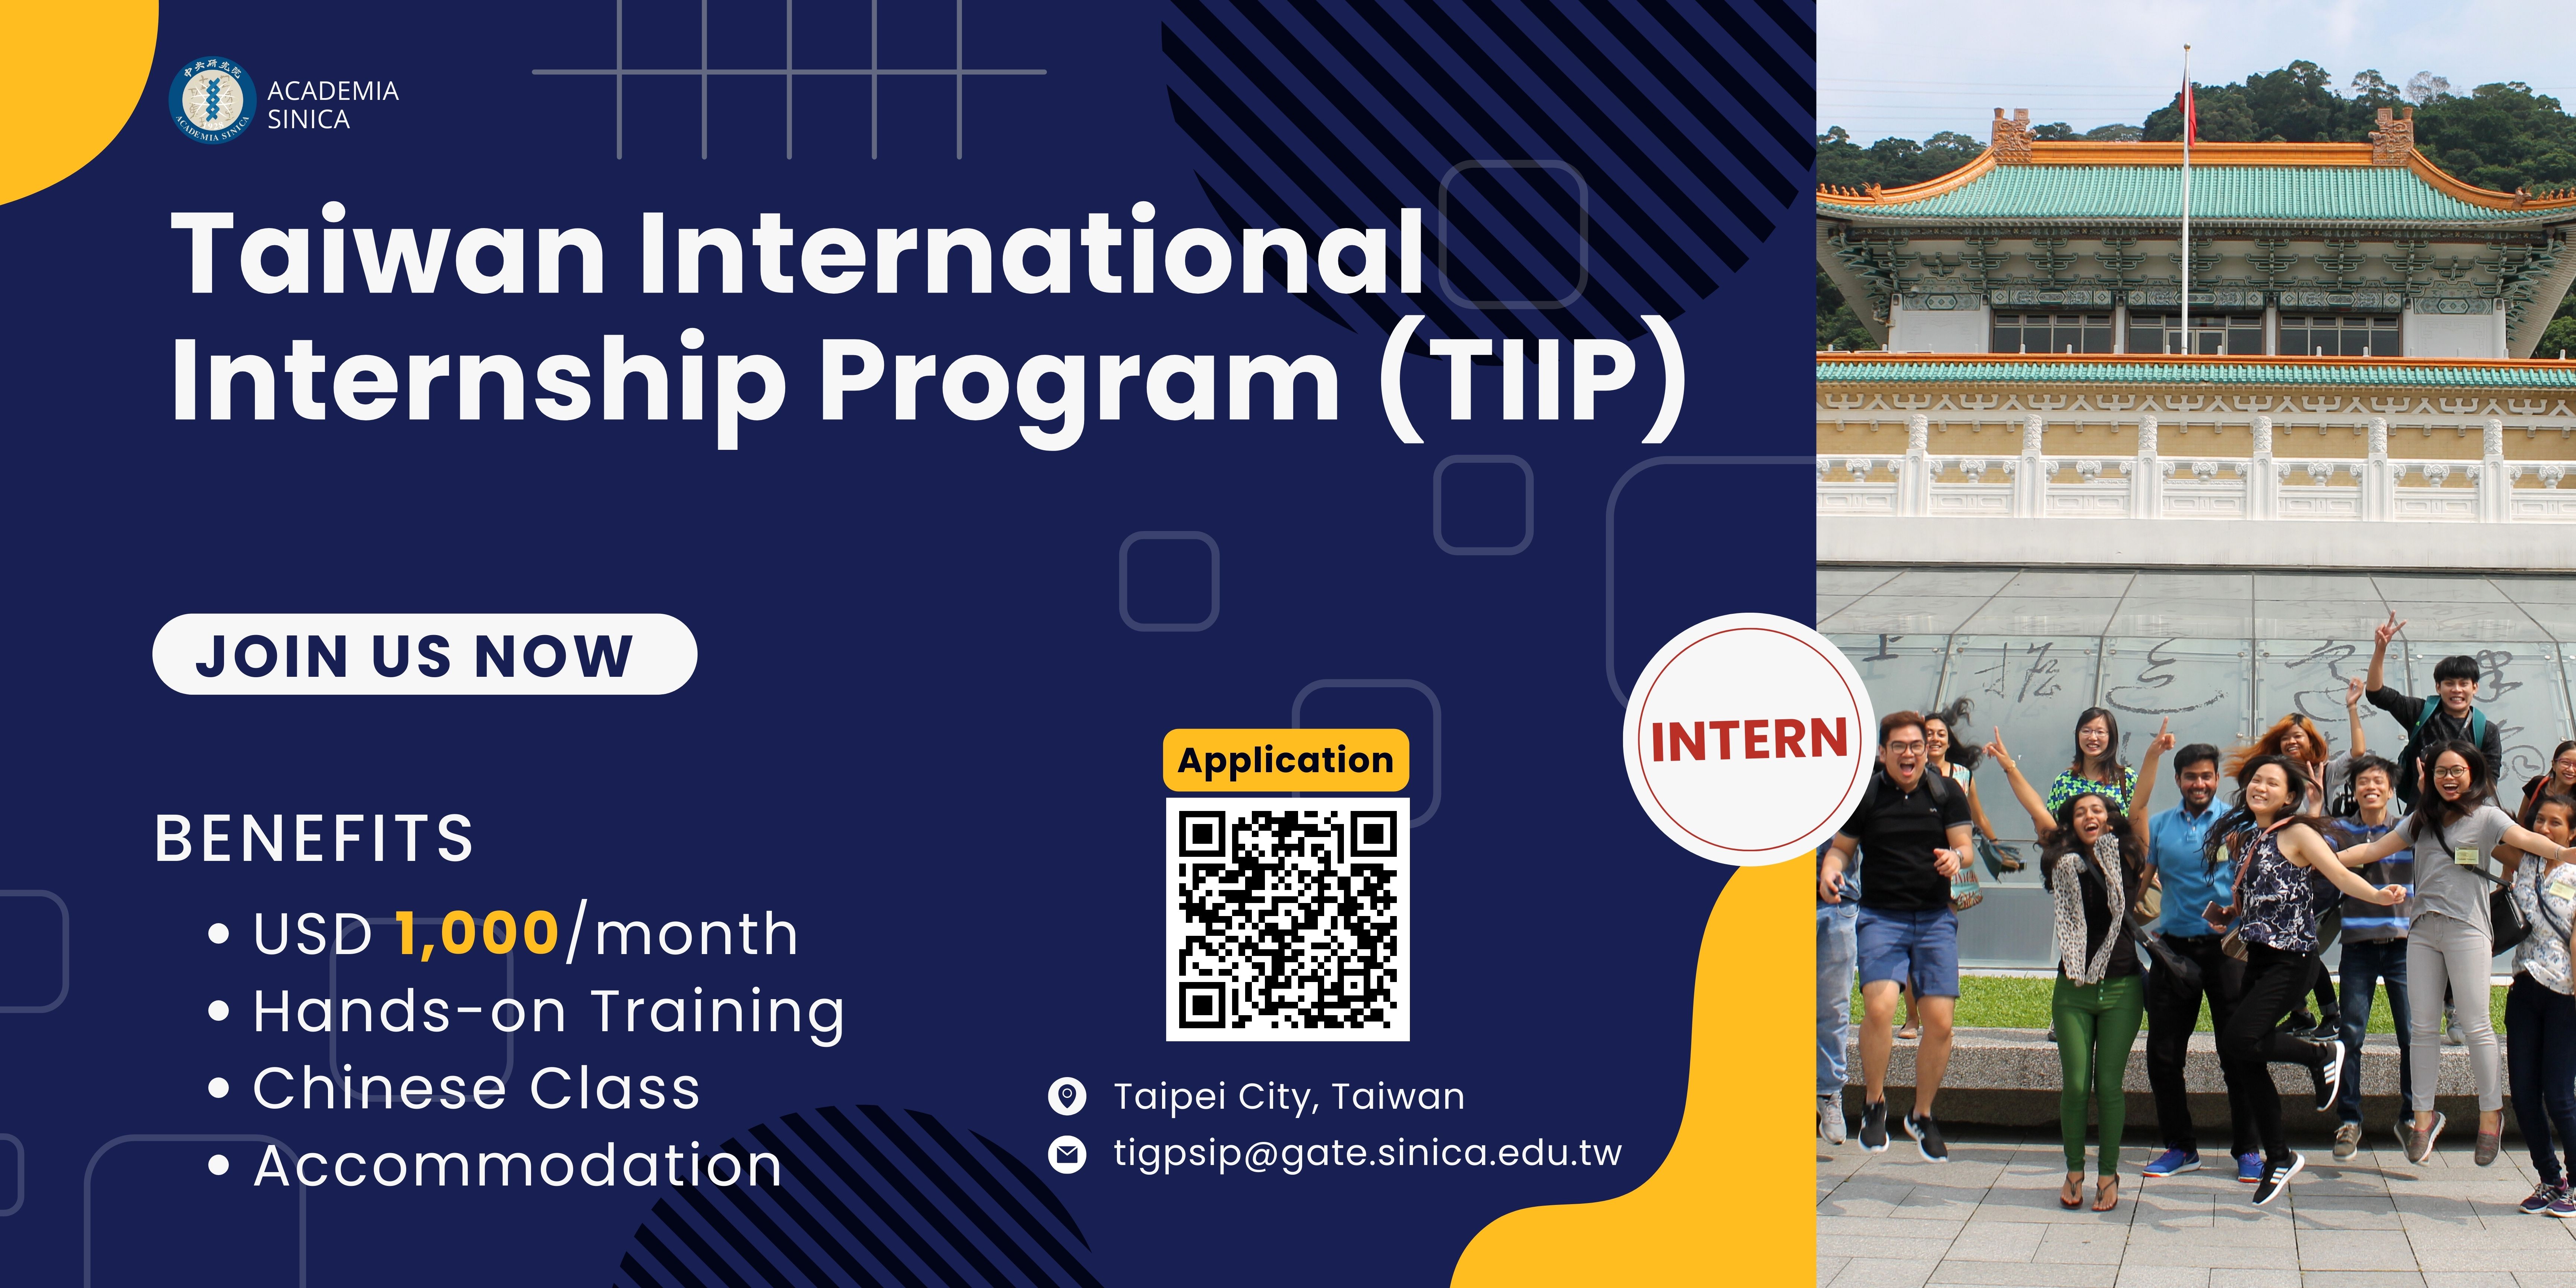 On-Site Interview for Taiwan International Internship Program (TIIP)